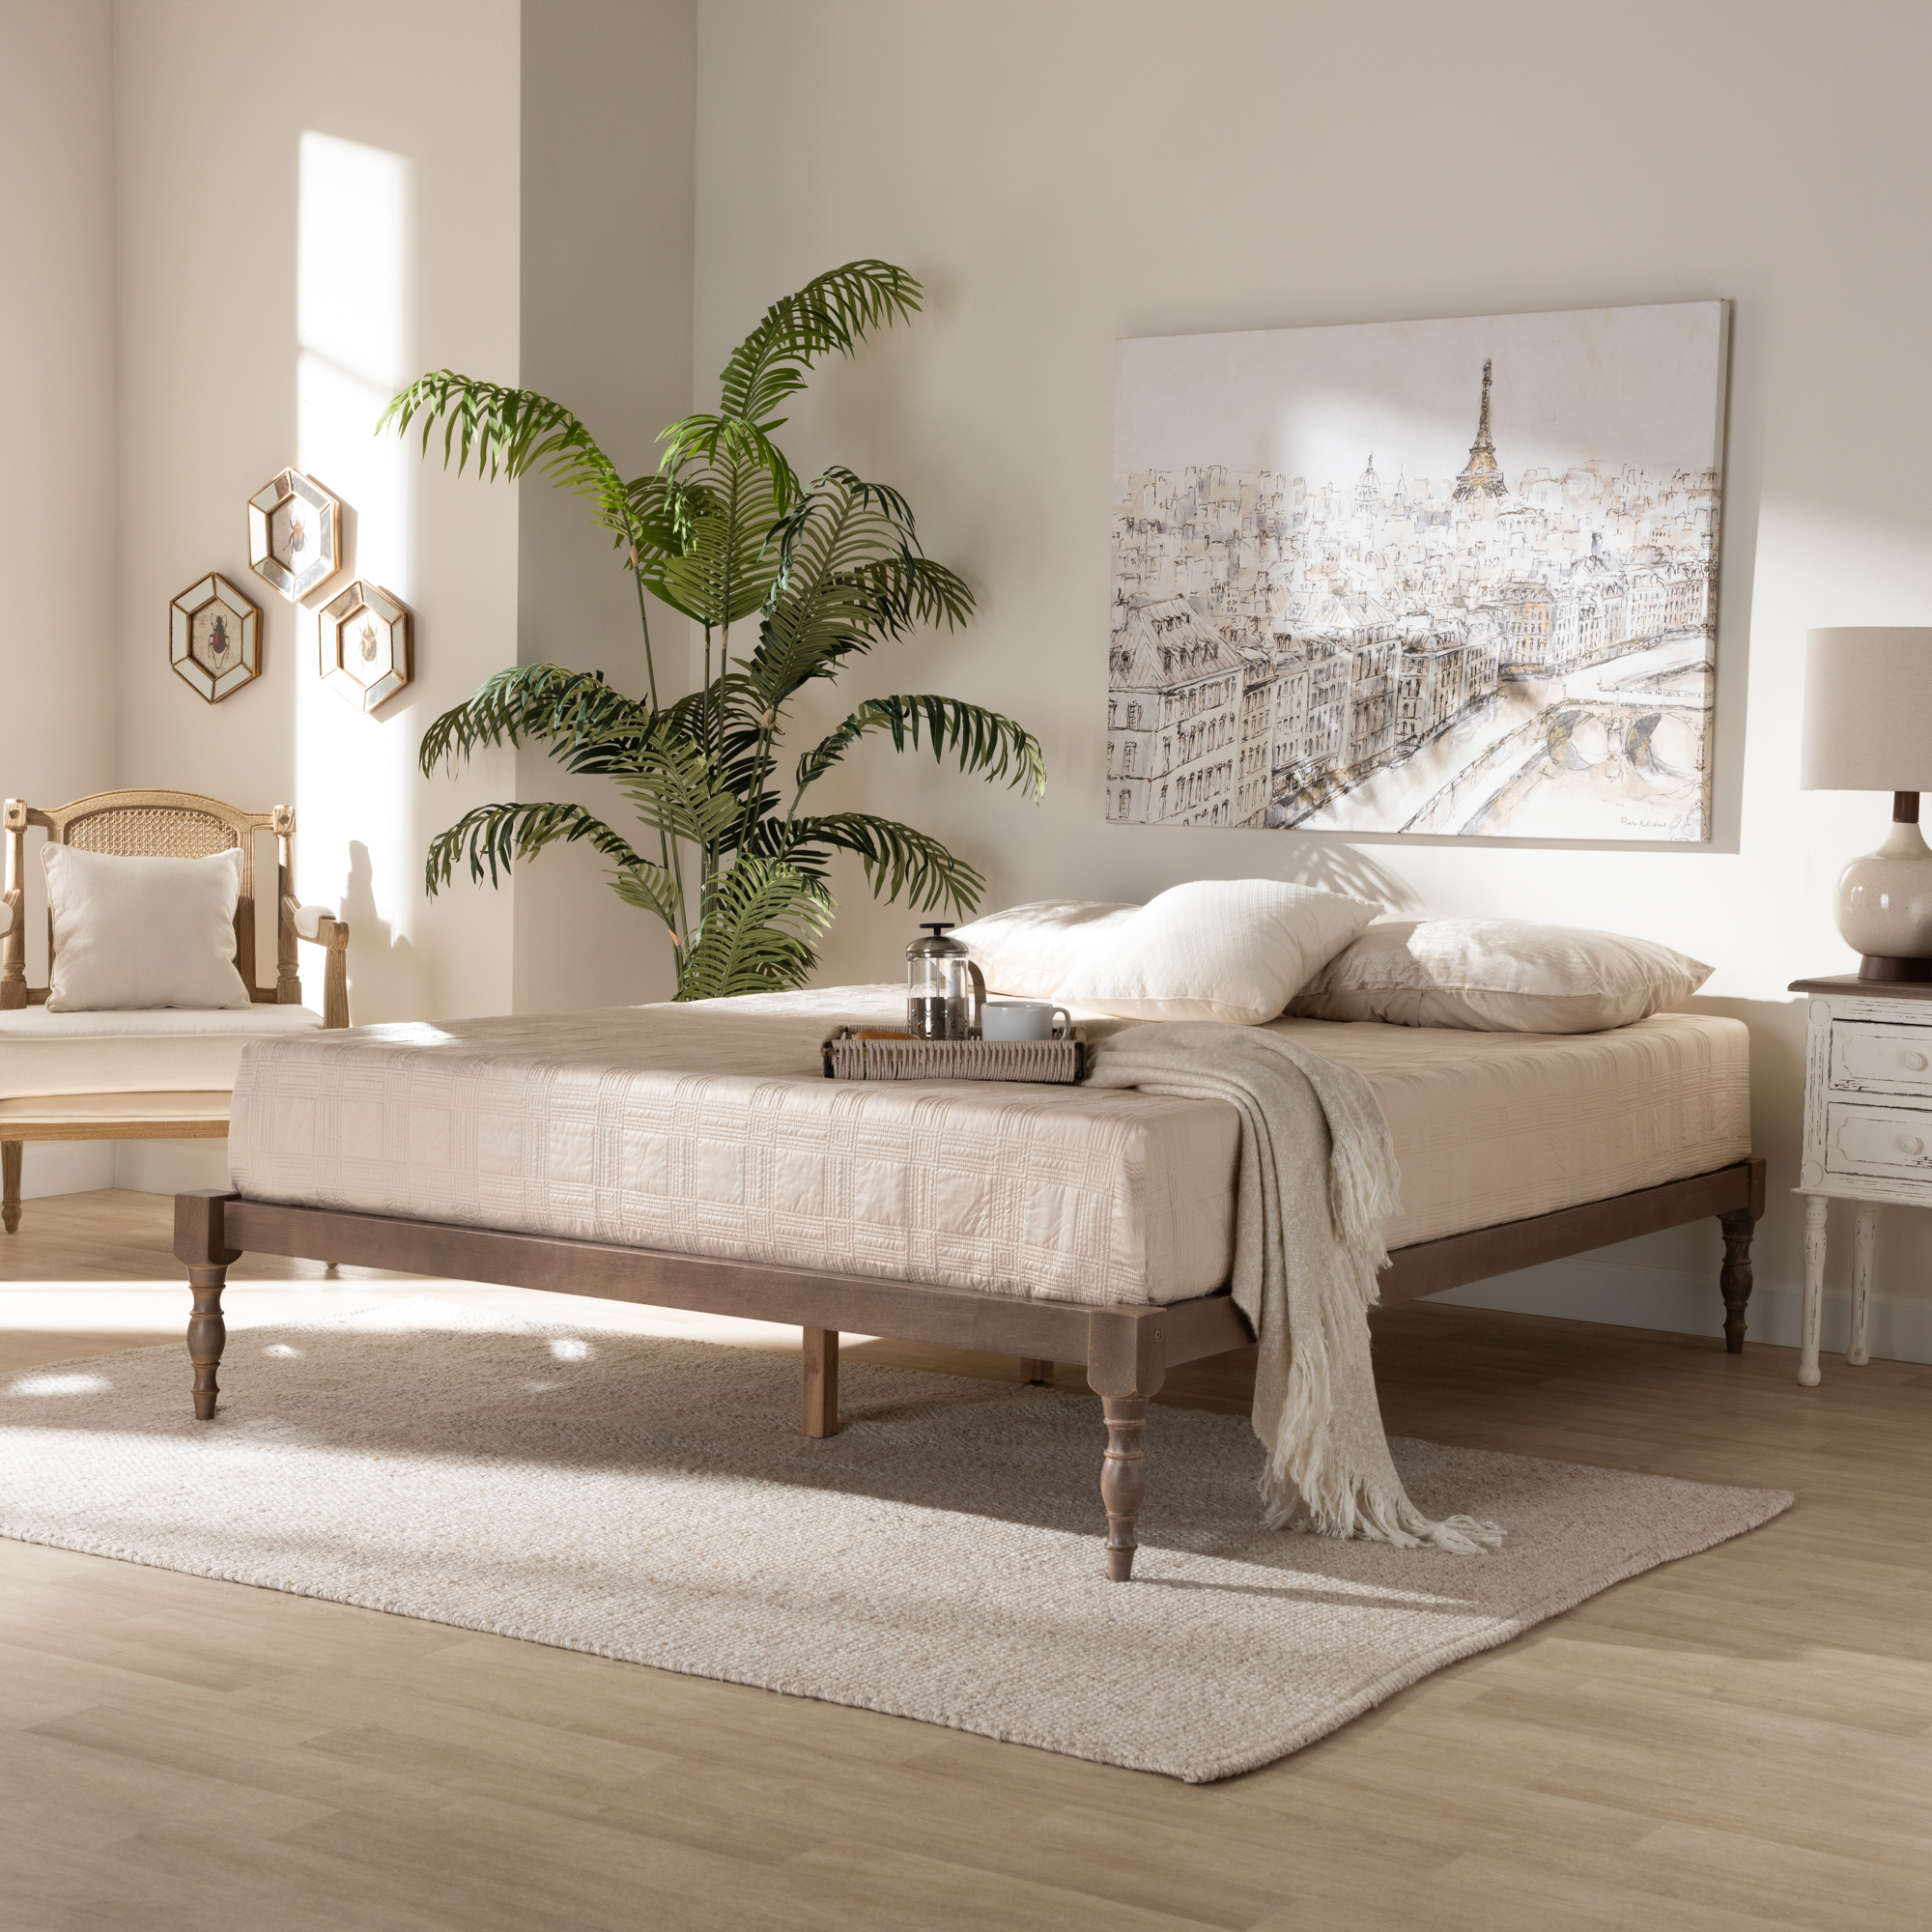 Baxton Studio Iseline Modern and Contemporary Antique Oak Finished Wood Full Size Platform Bed Frame - image 1 of 9